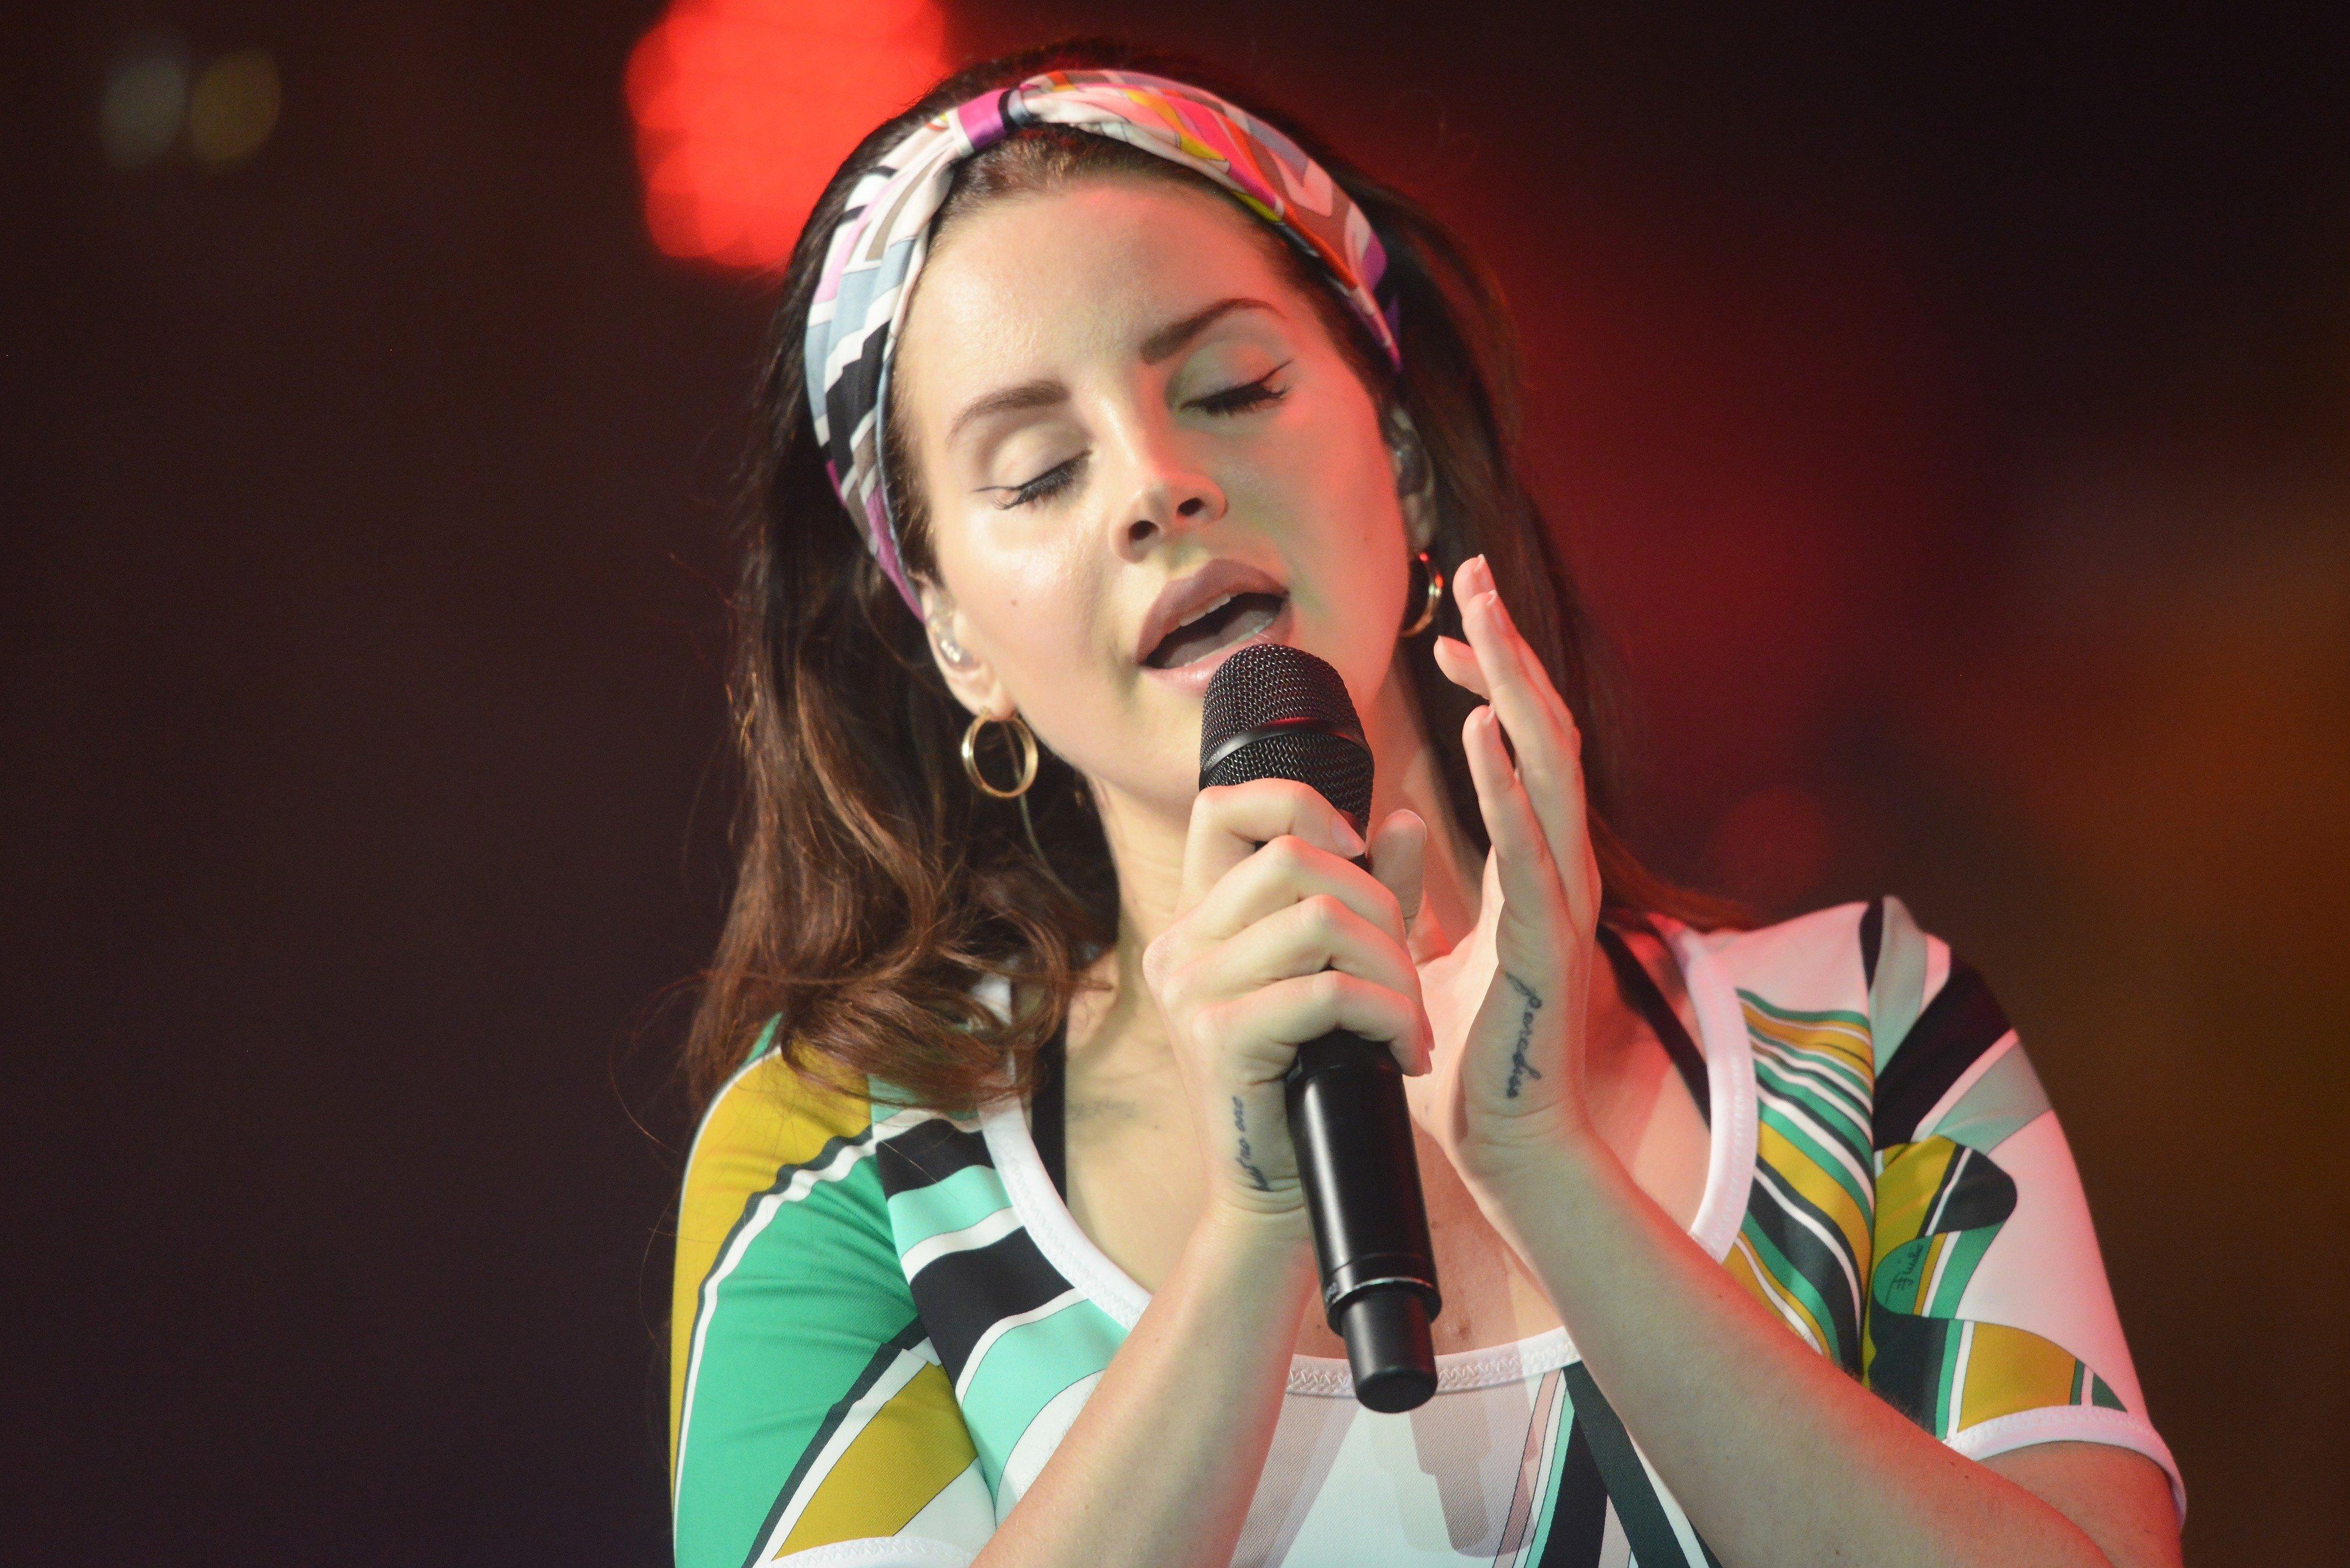 Lana Del Rey performs at BBC Radio 1's Big Weekend 2017